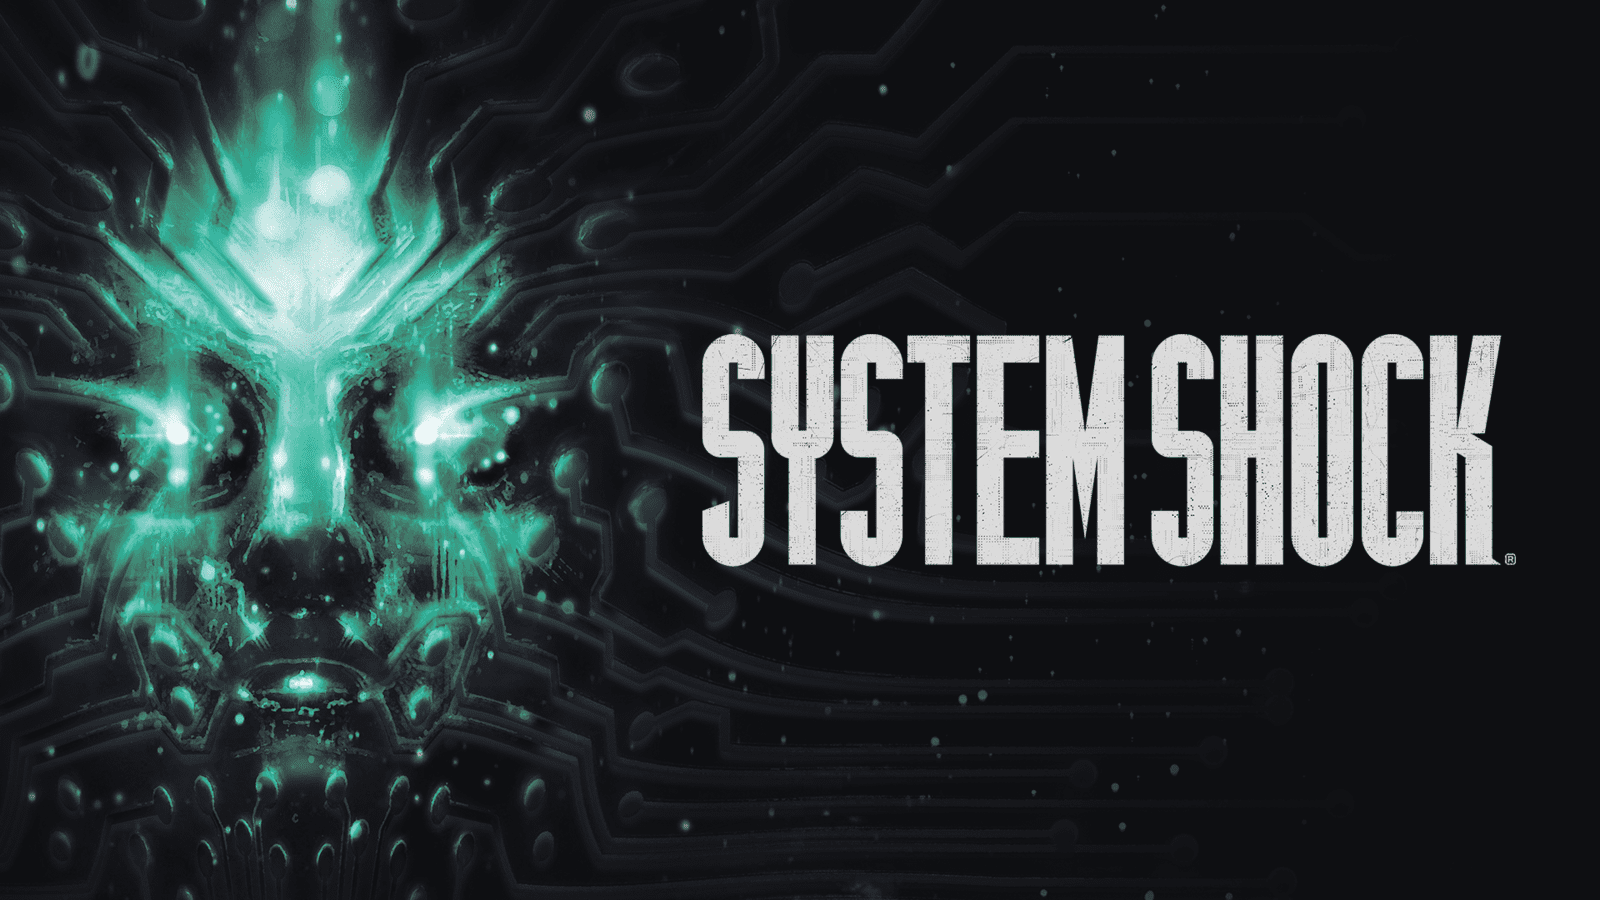 systemshock-epic_app_splash_screen_1920x1080